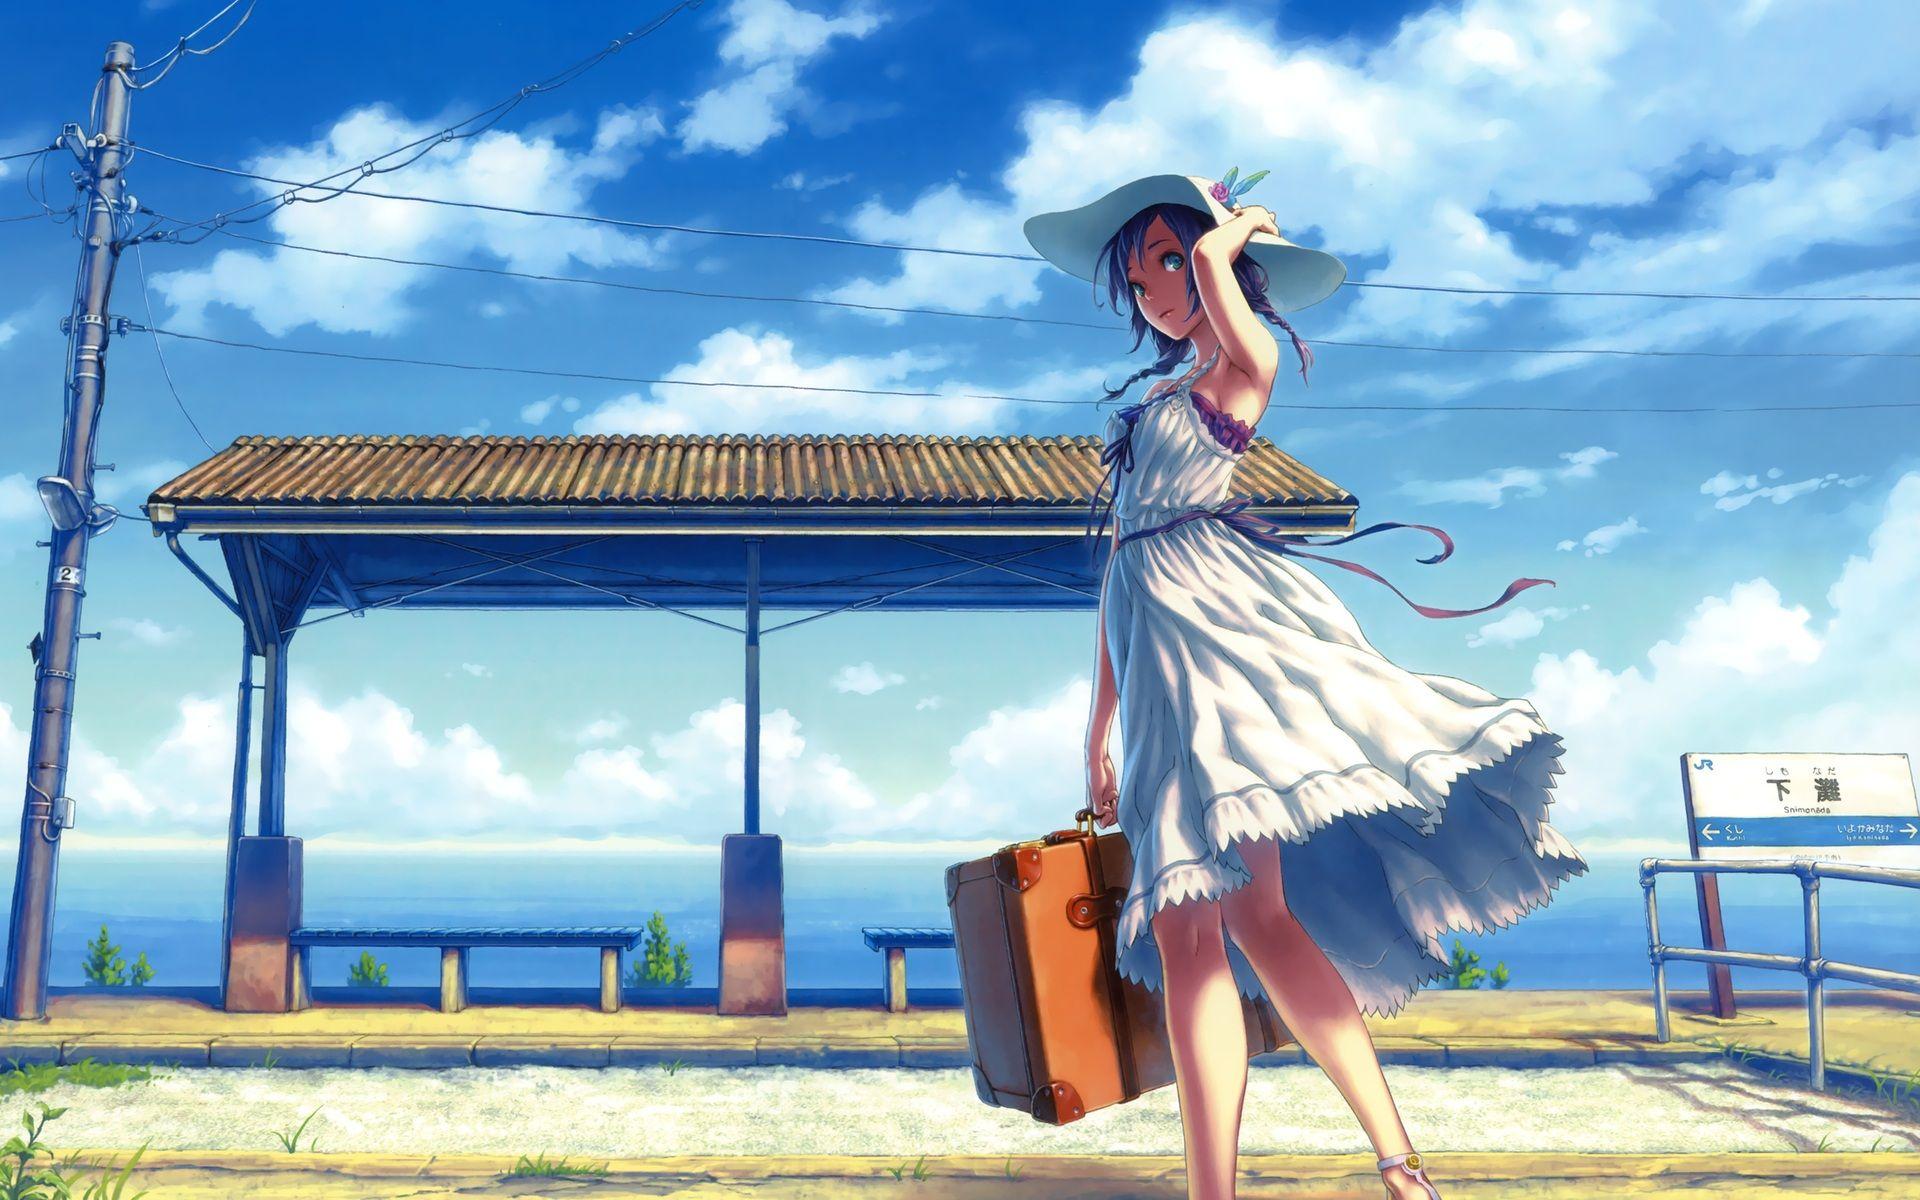 Summertime anime girl - Other & Anime Background Wallpapers on Desktop  Nexus (Image 1472342)